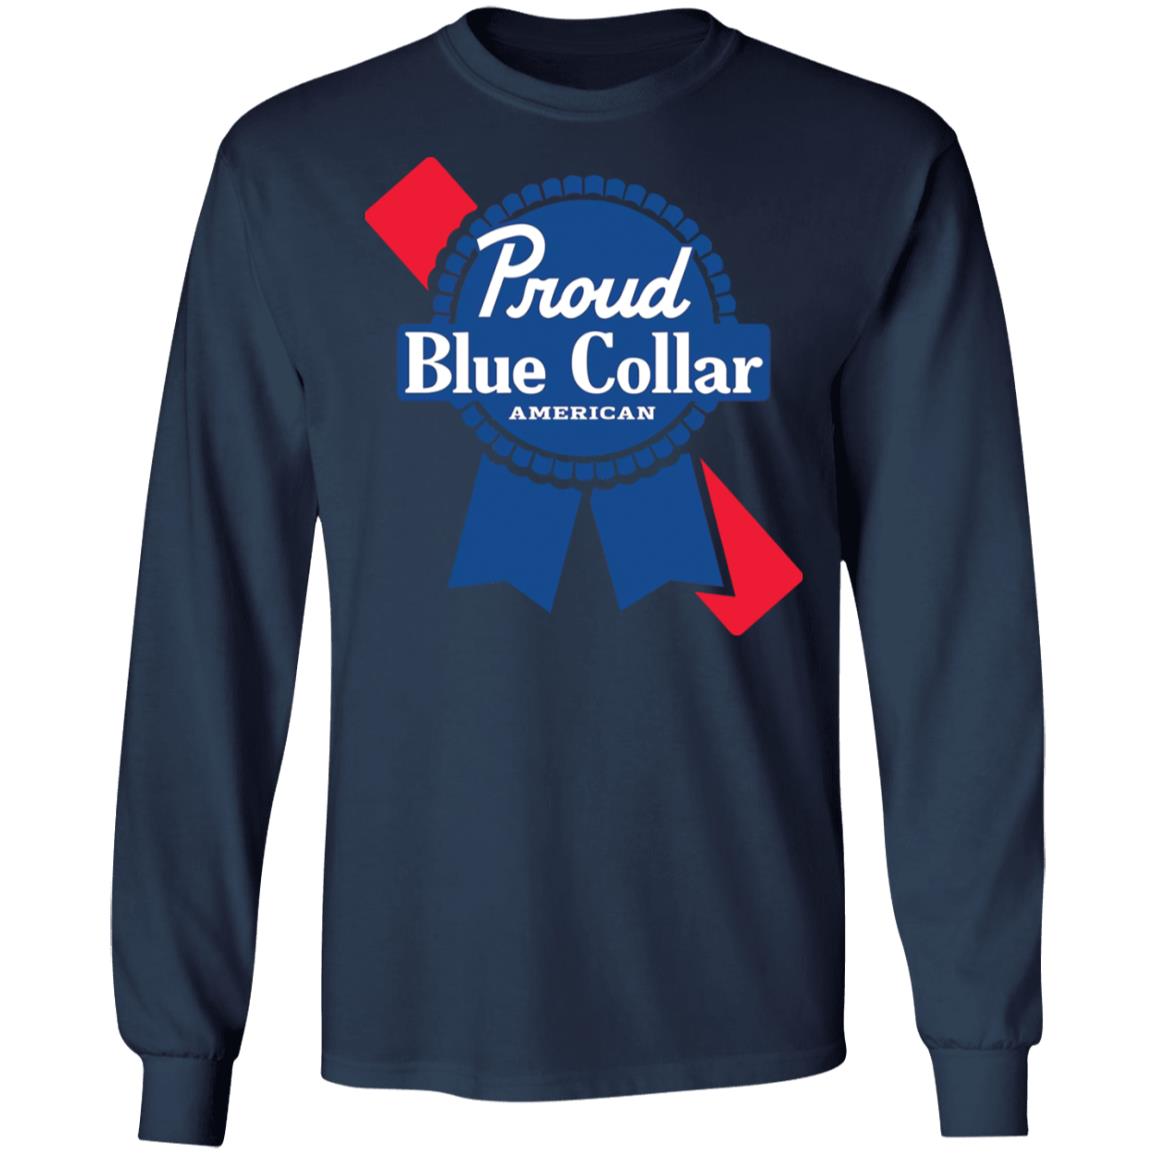 Proud Blue Collar American shirt - Rockatee